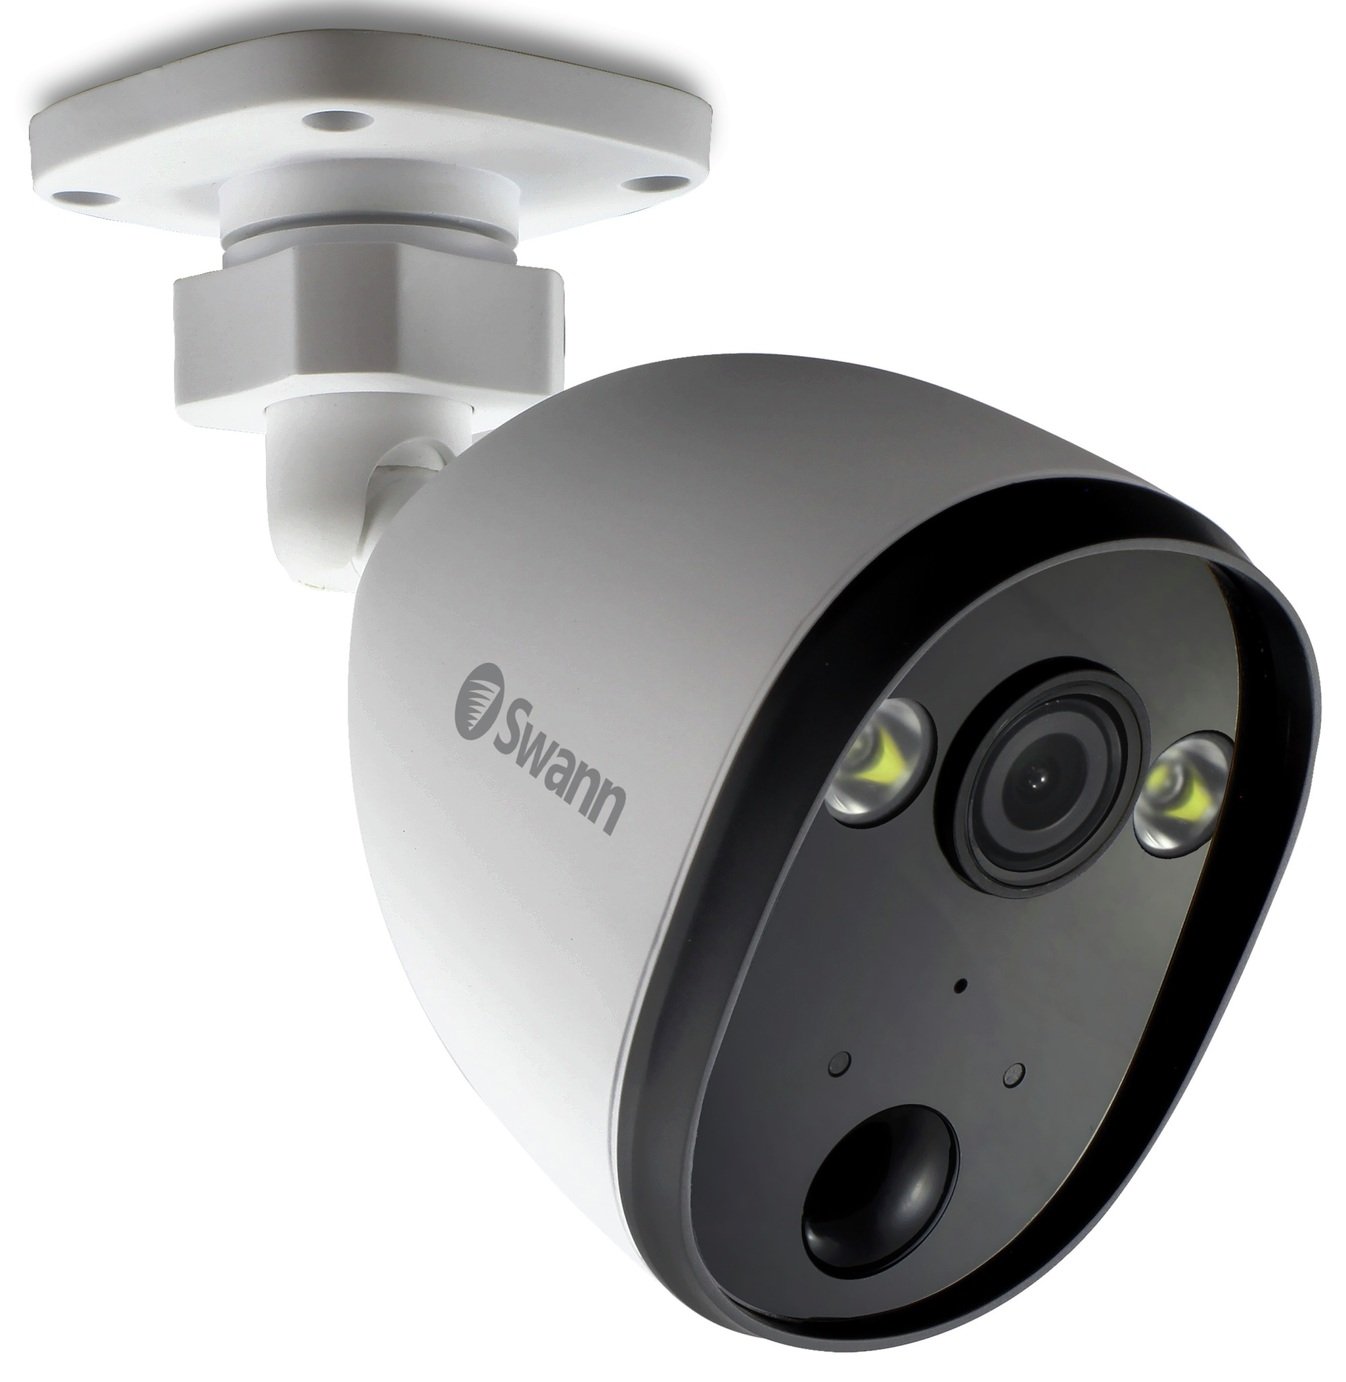 wireless security cameras argos